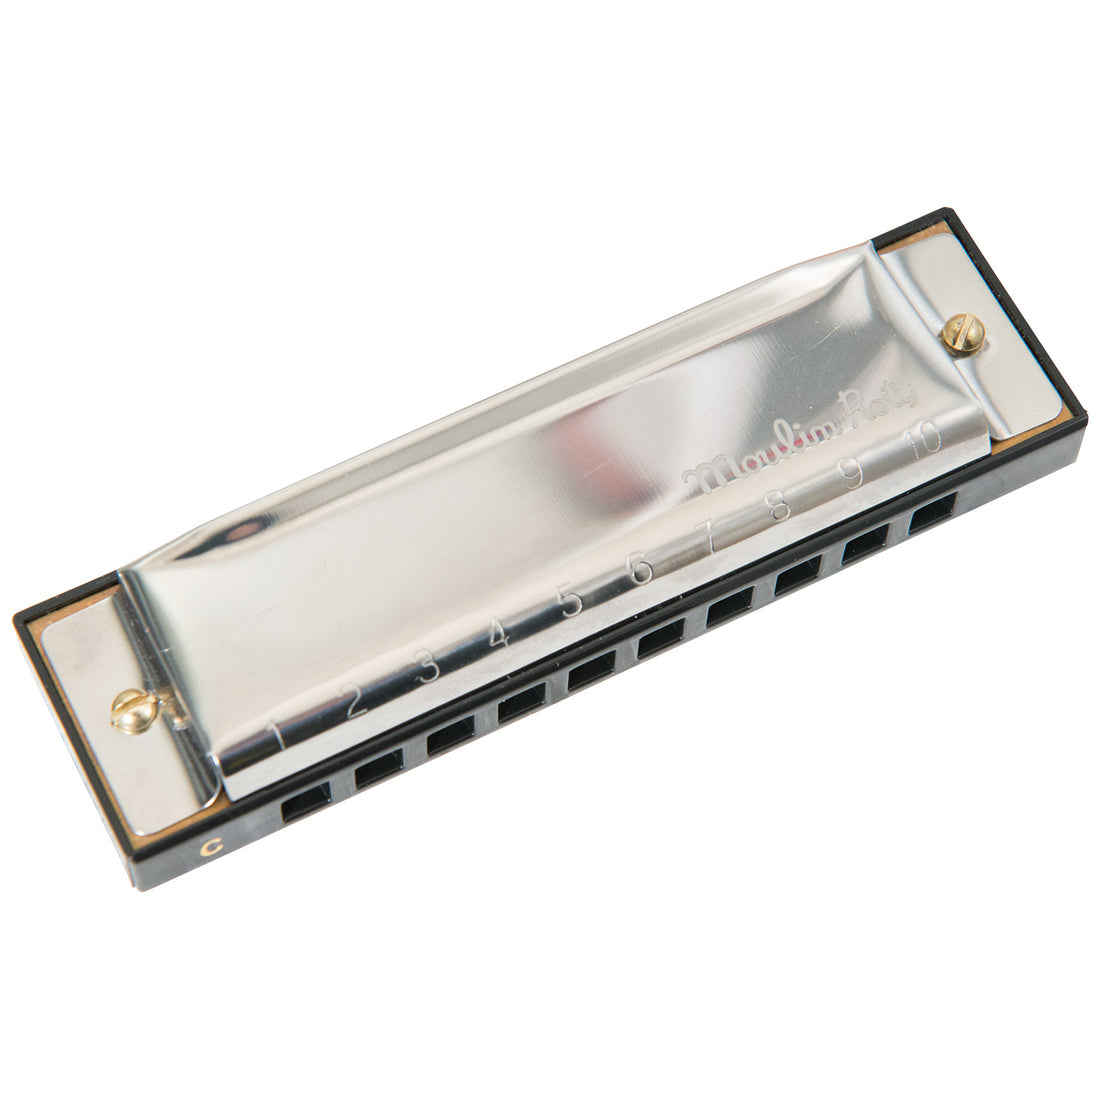 moulin-roty-aujourd-hui-c-est-mercredi-metal-harmonica-in-gift-box-packed-moul-713107